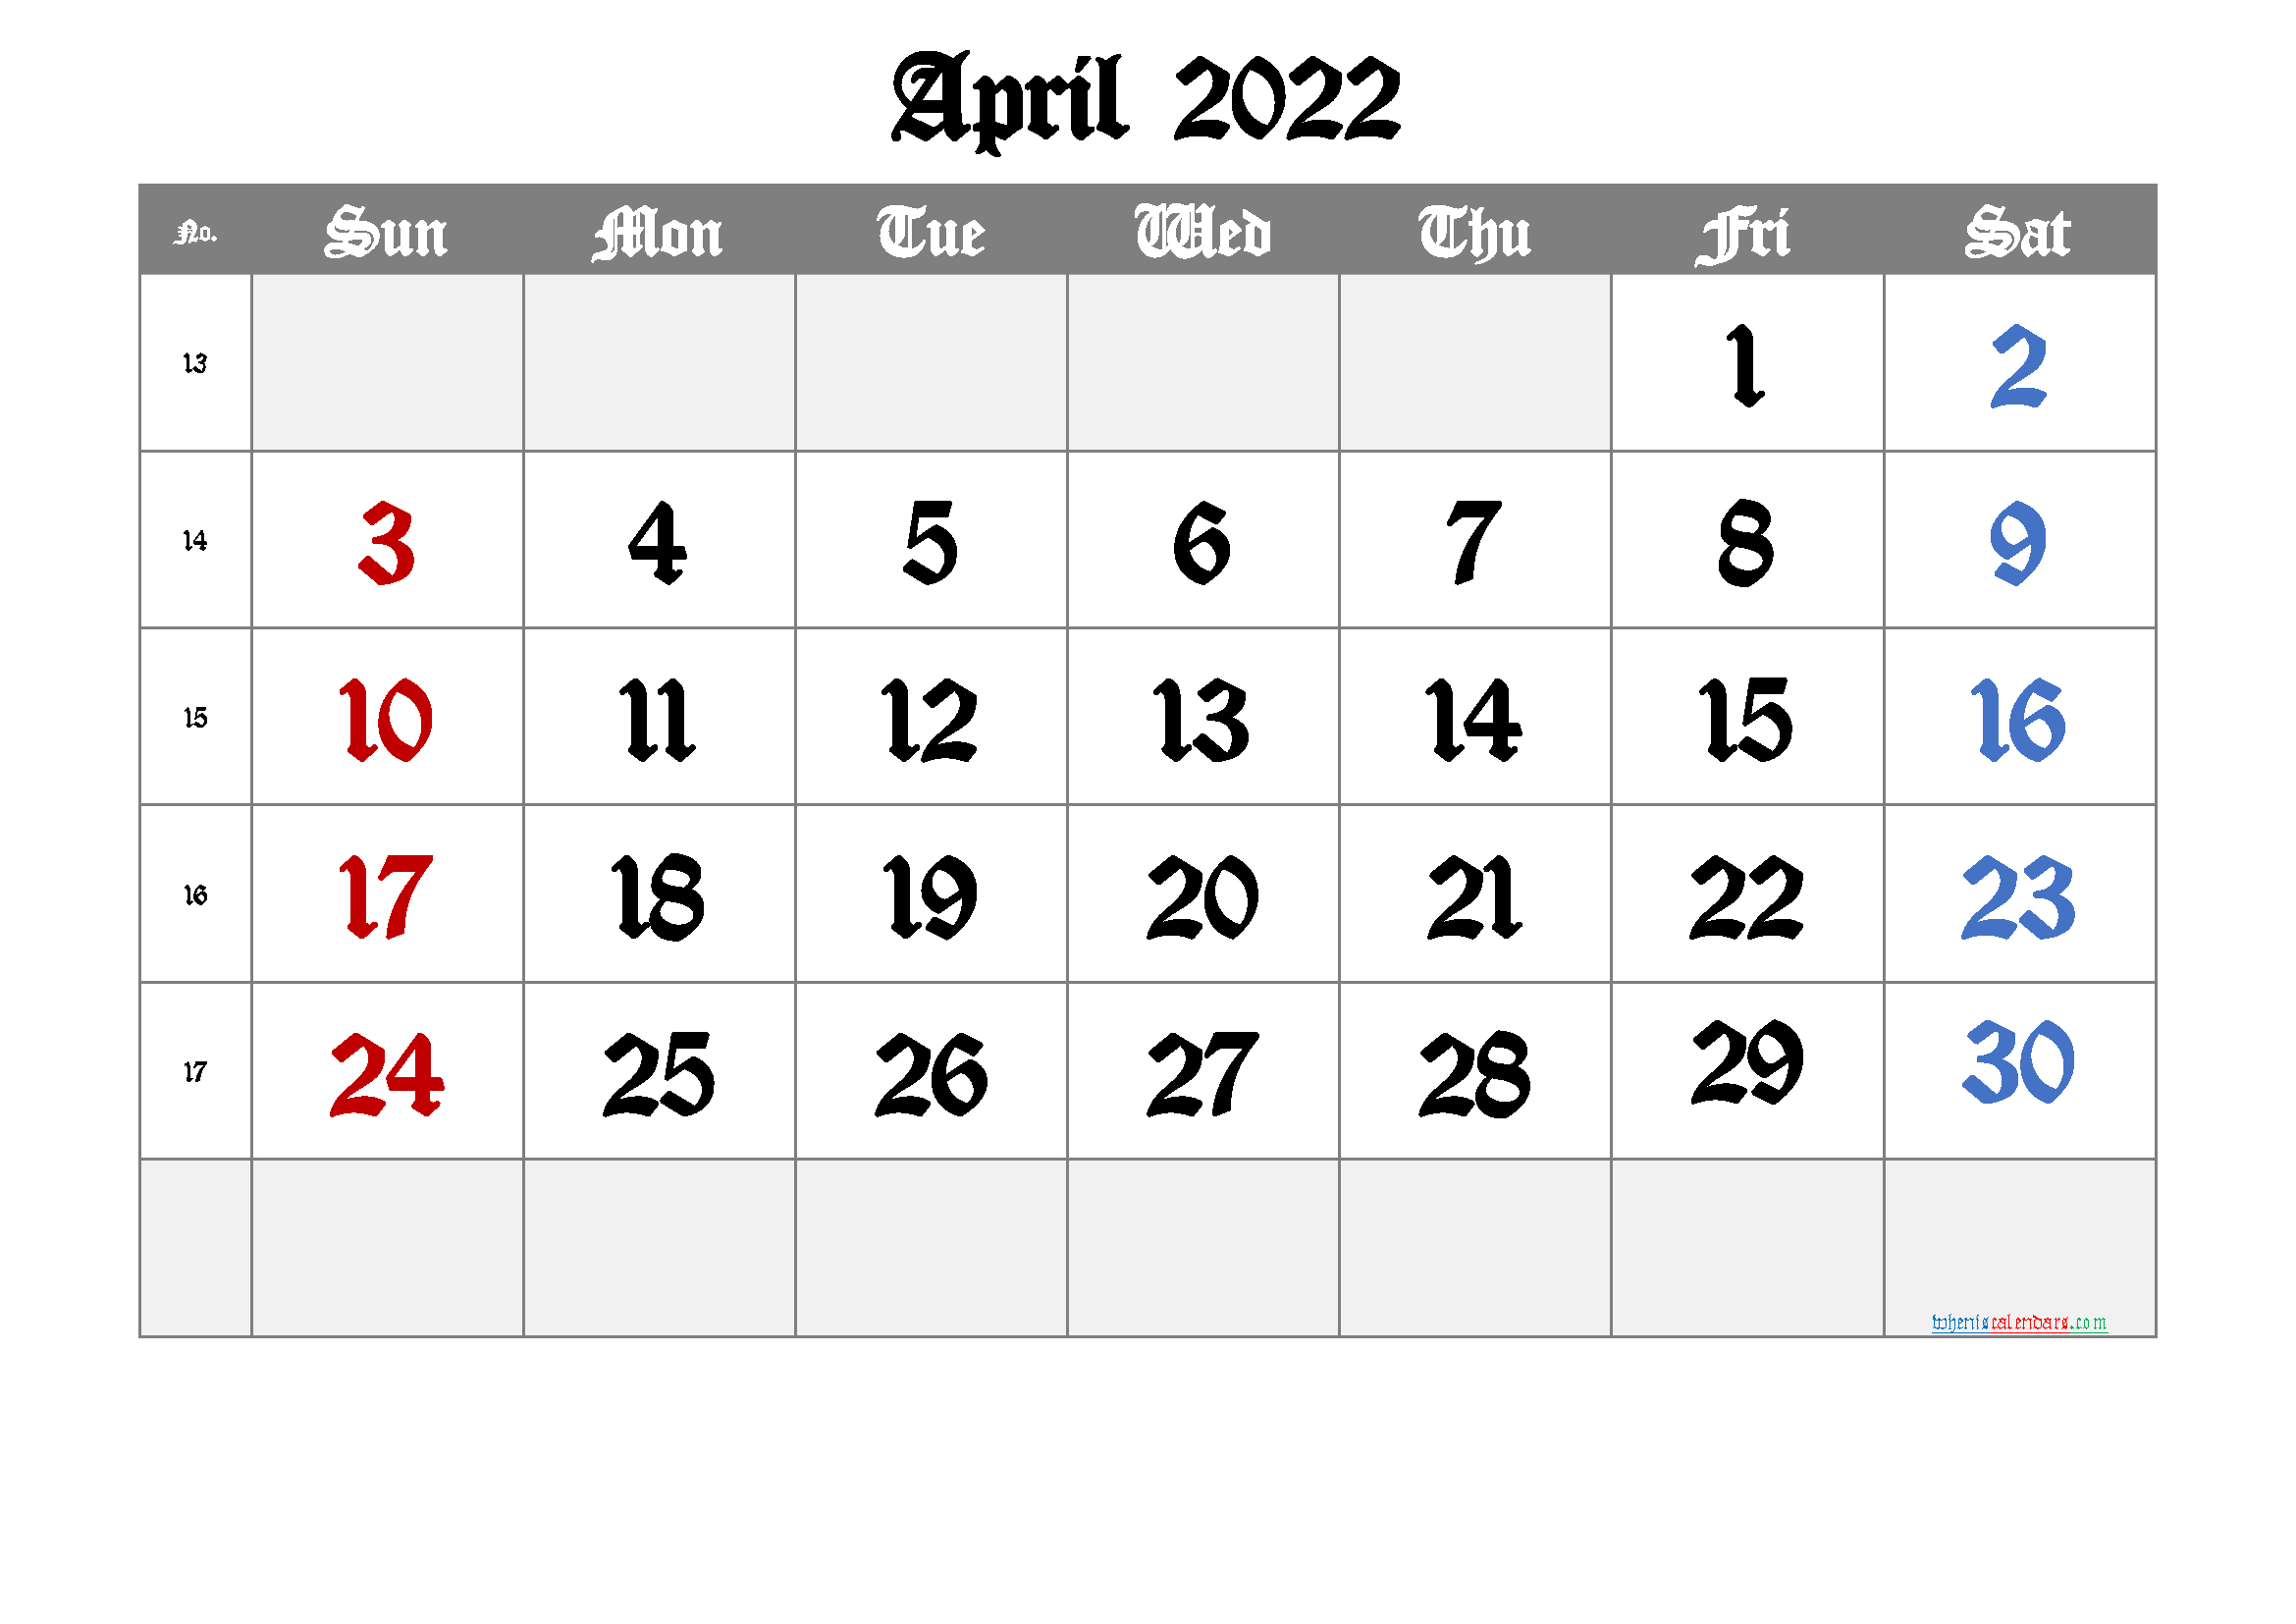 Catch April 23 2022 Calendar